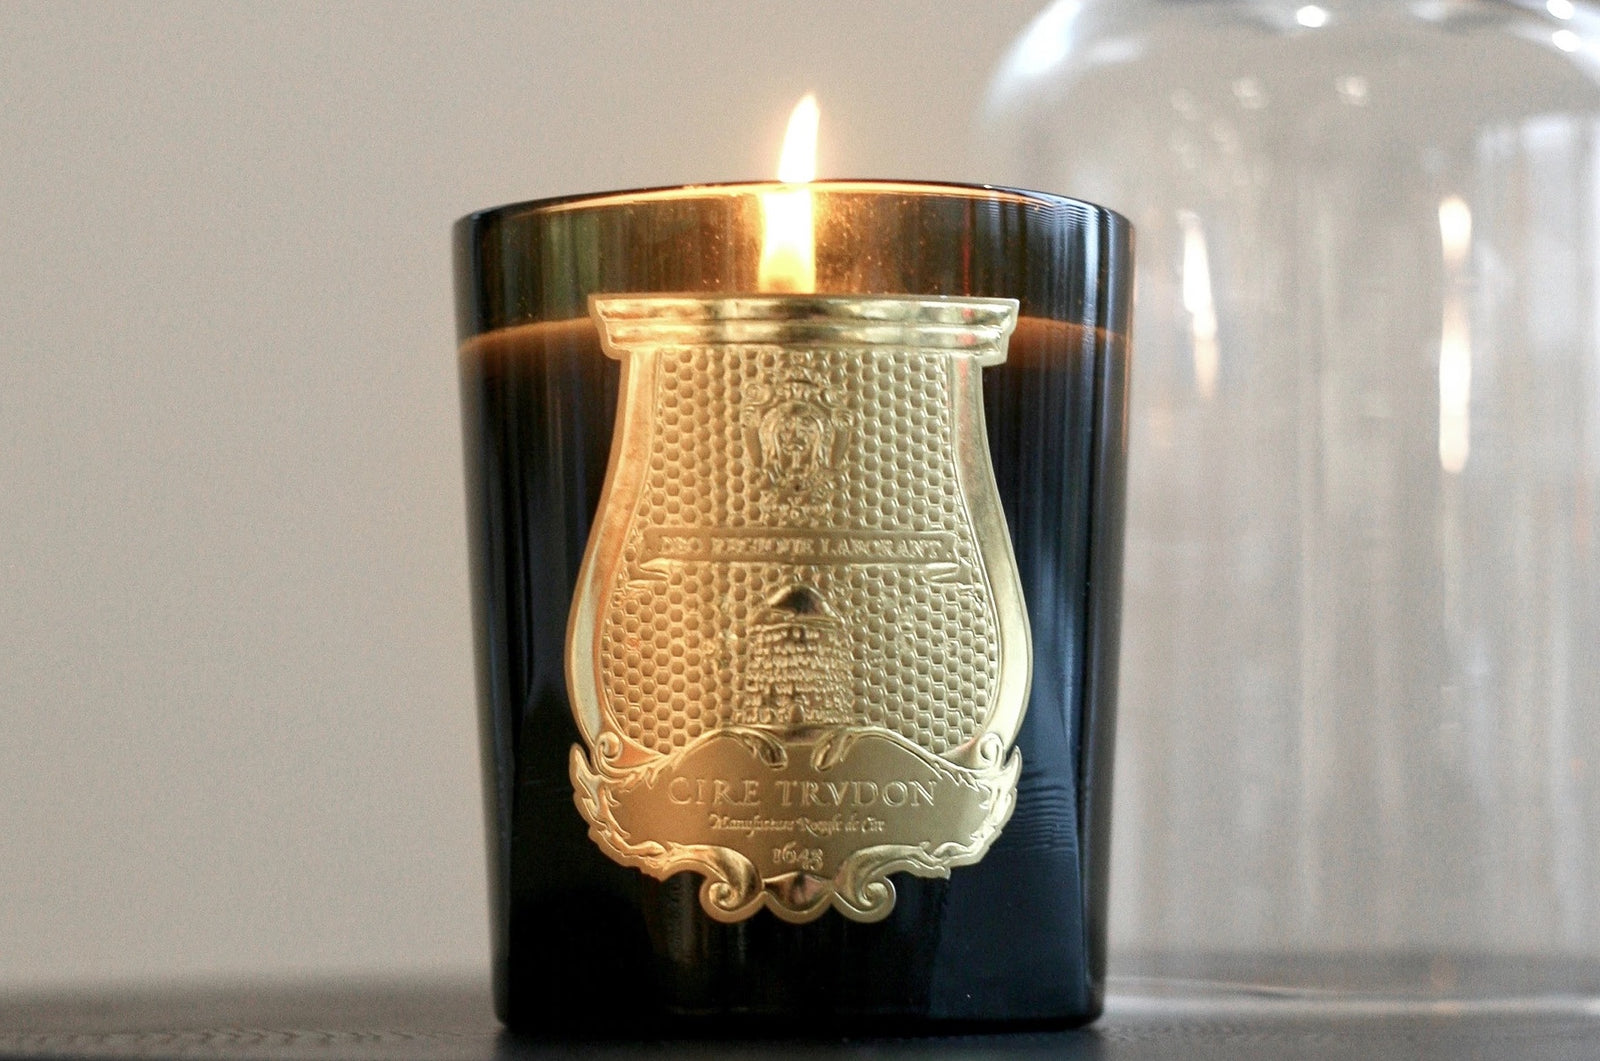 L'article : Louis Vuitton enhances its scented candles collection